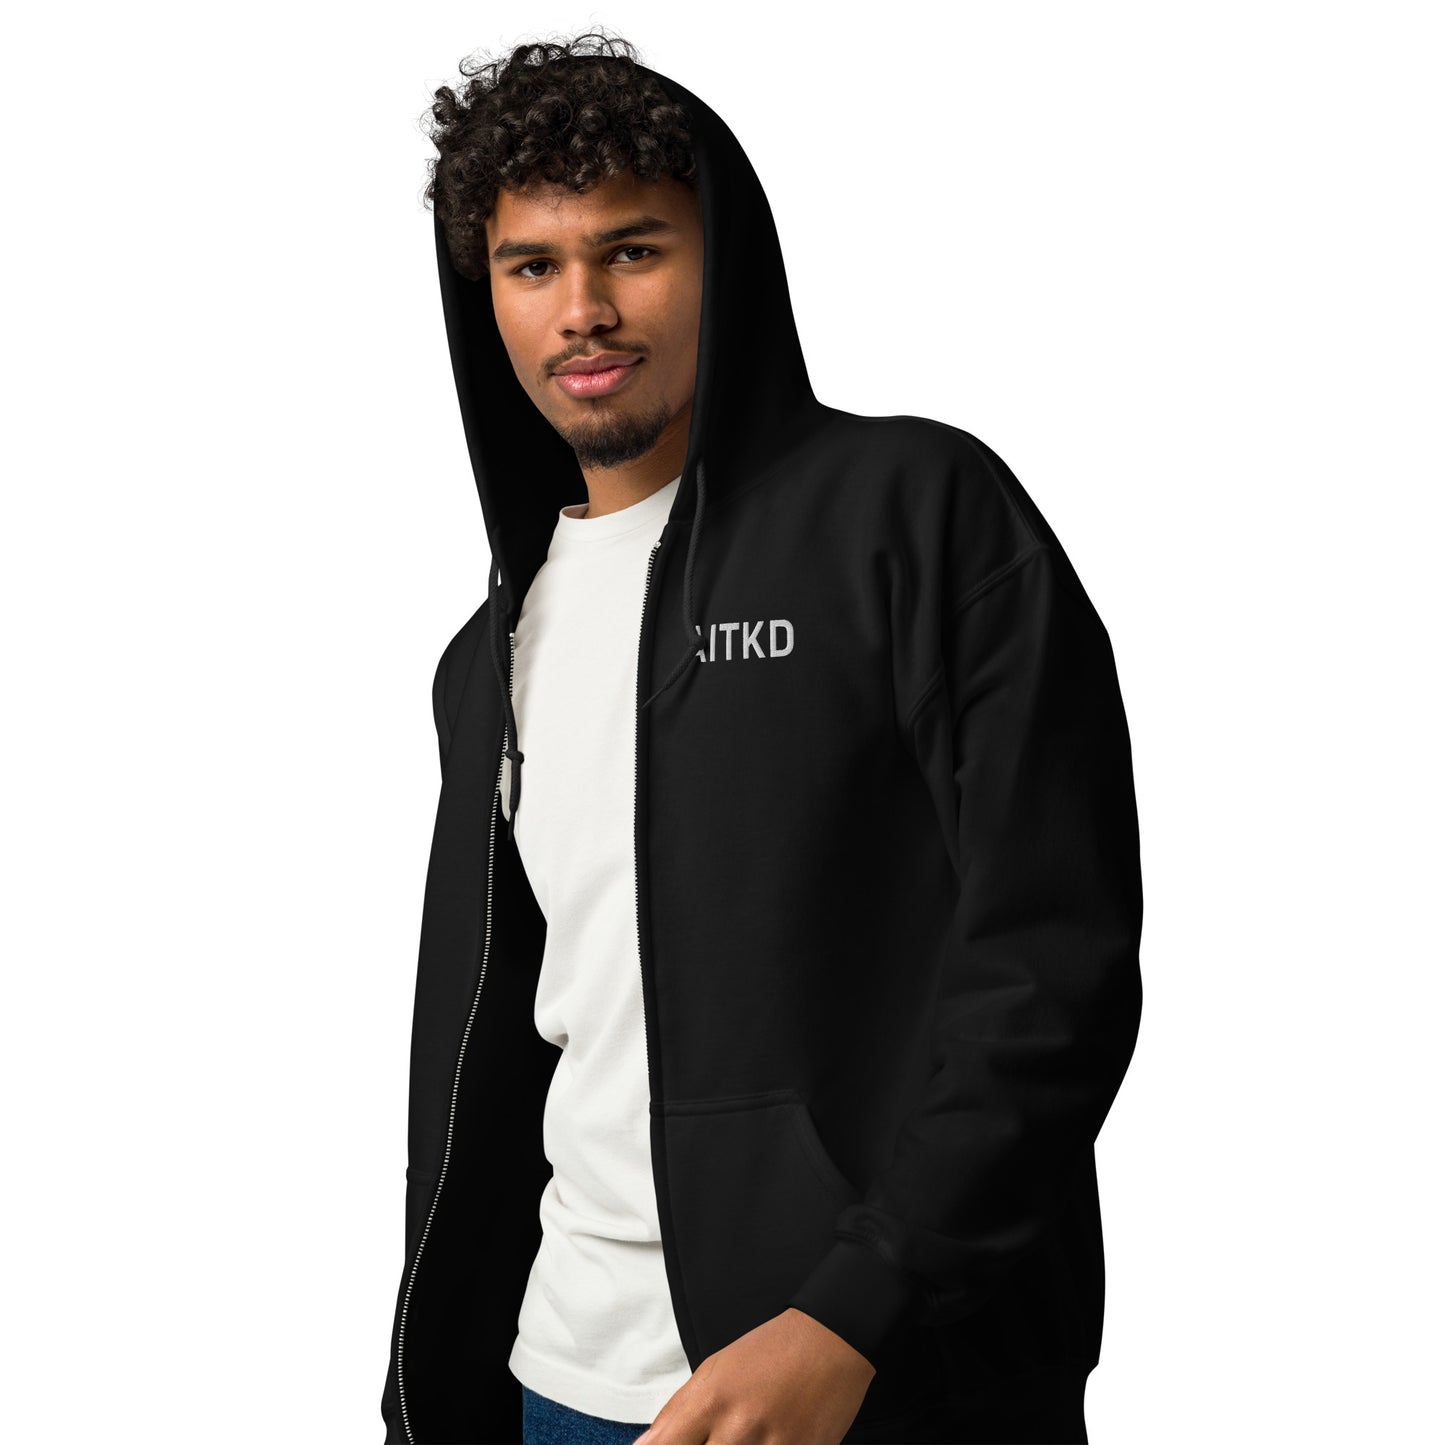 AITKD - Unisex zip hoodie